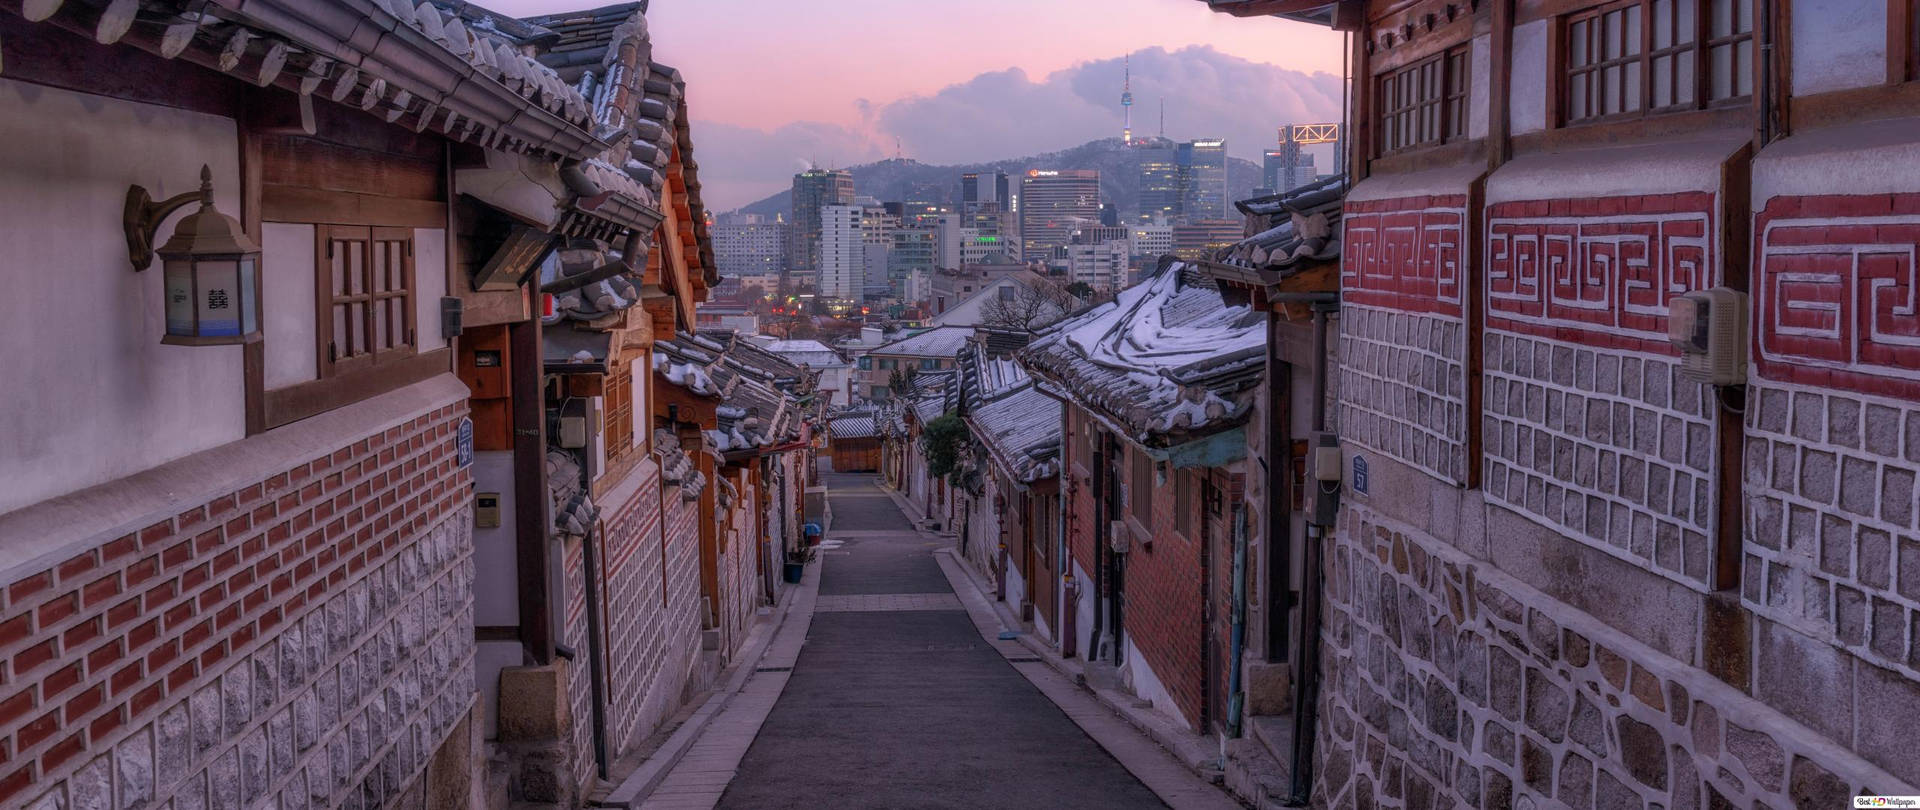 Asia Bukchon Hanok Seoul South Korea Background